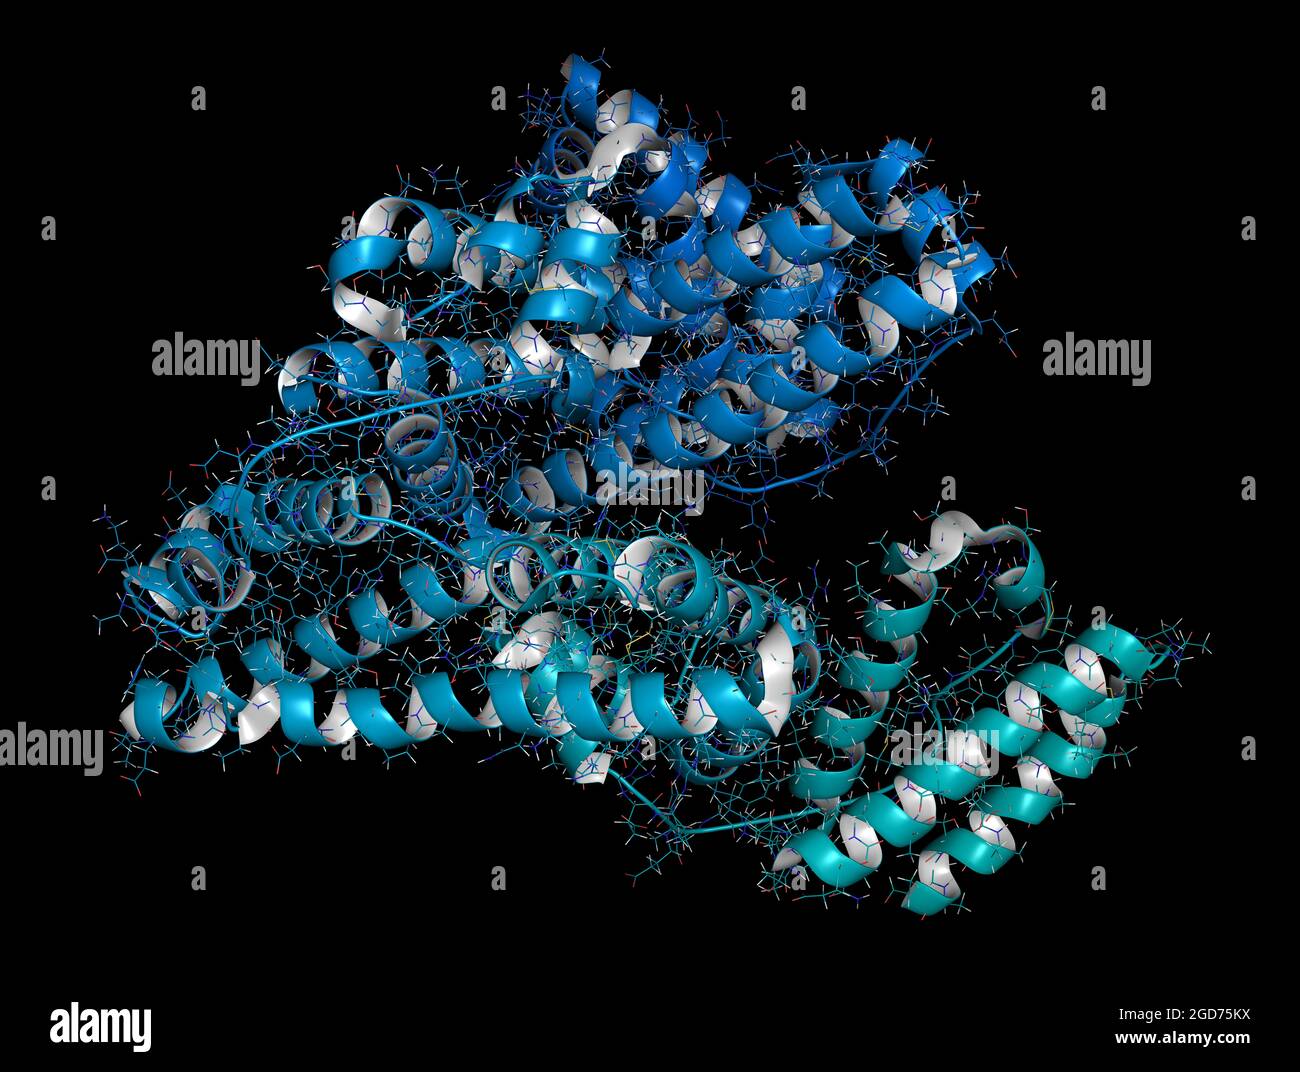 Human serum albumin protein, 3D rendering. Cartoon & wireframe r Stock Photo